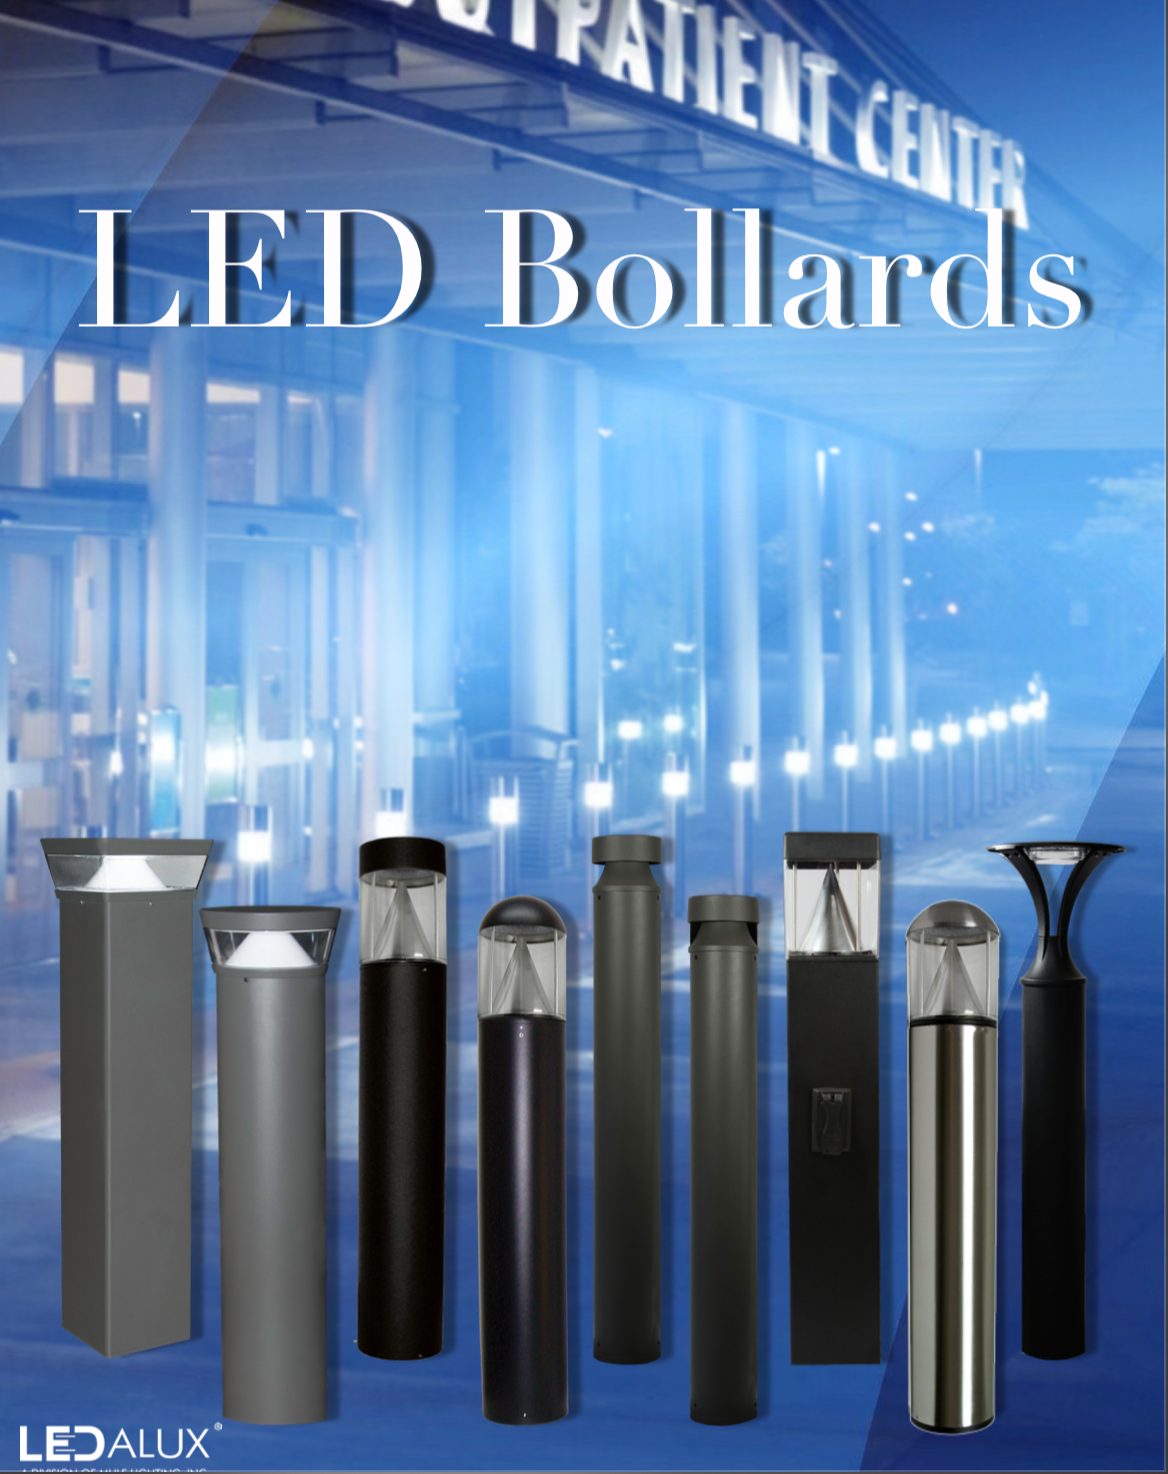 LEDalux LED Bollards Literature